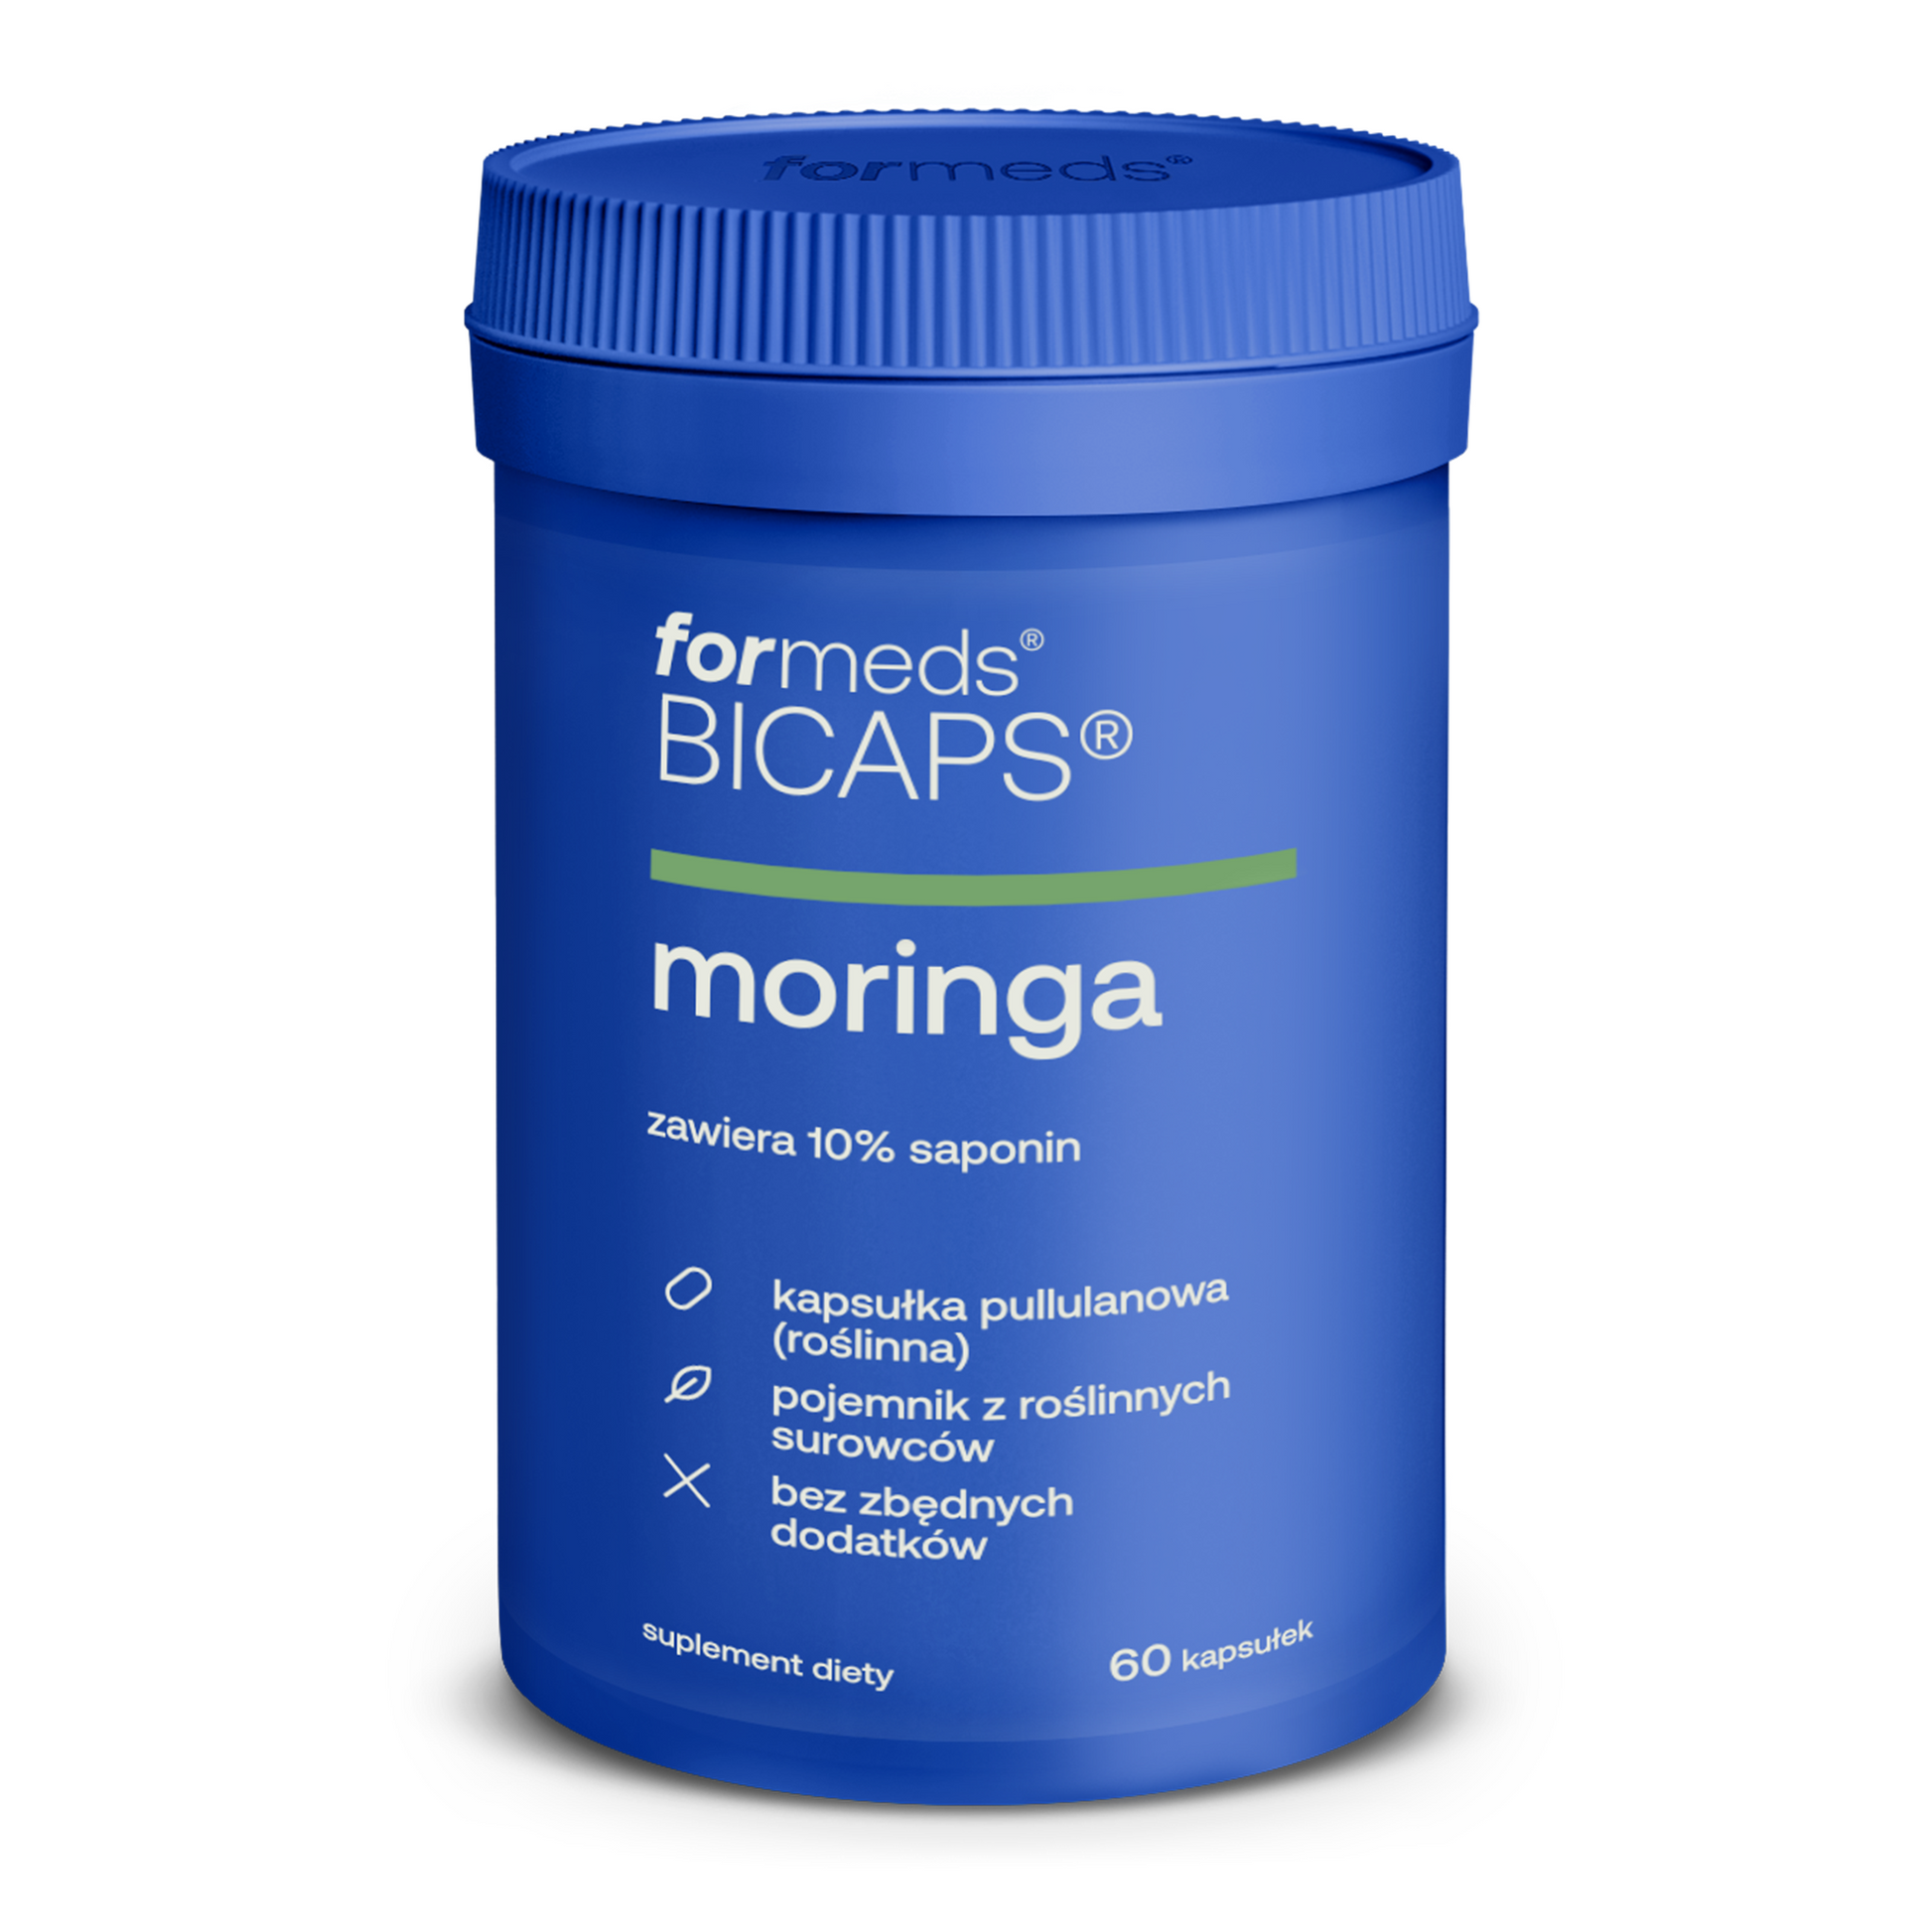 BICAPS Moringa - tabletki, kapsułki, ekstrakt z liści moringa